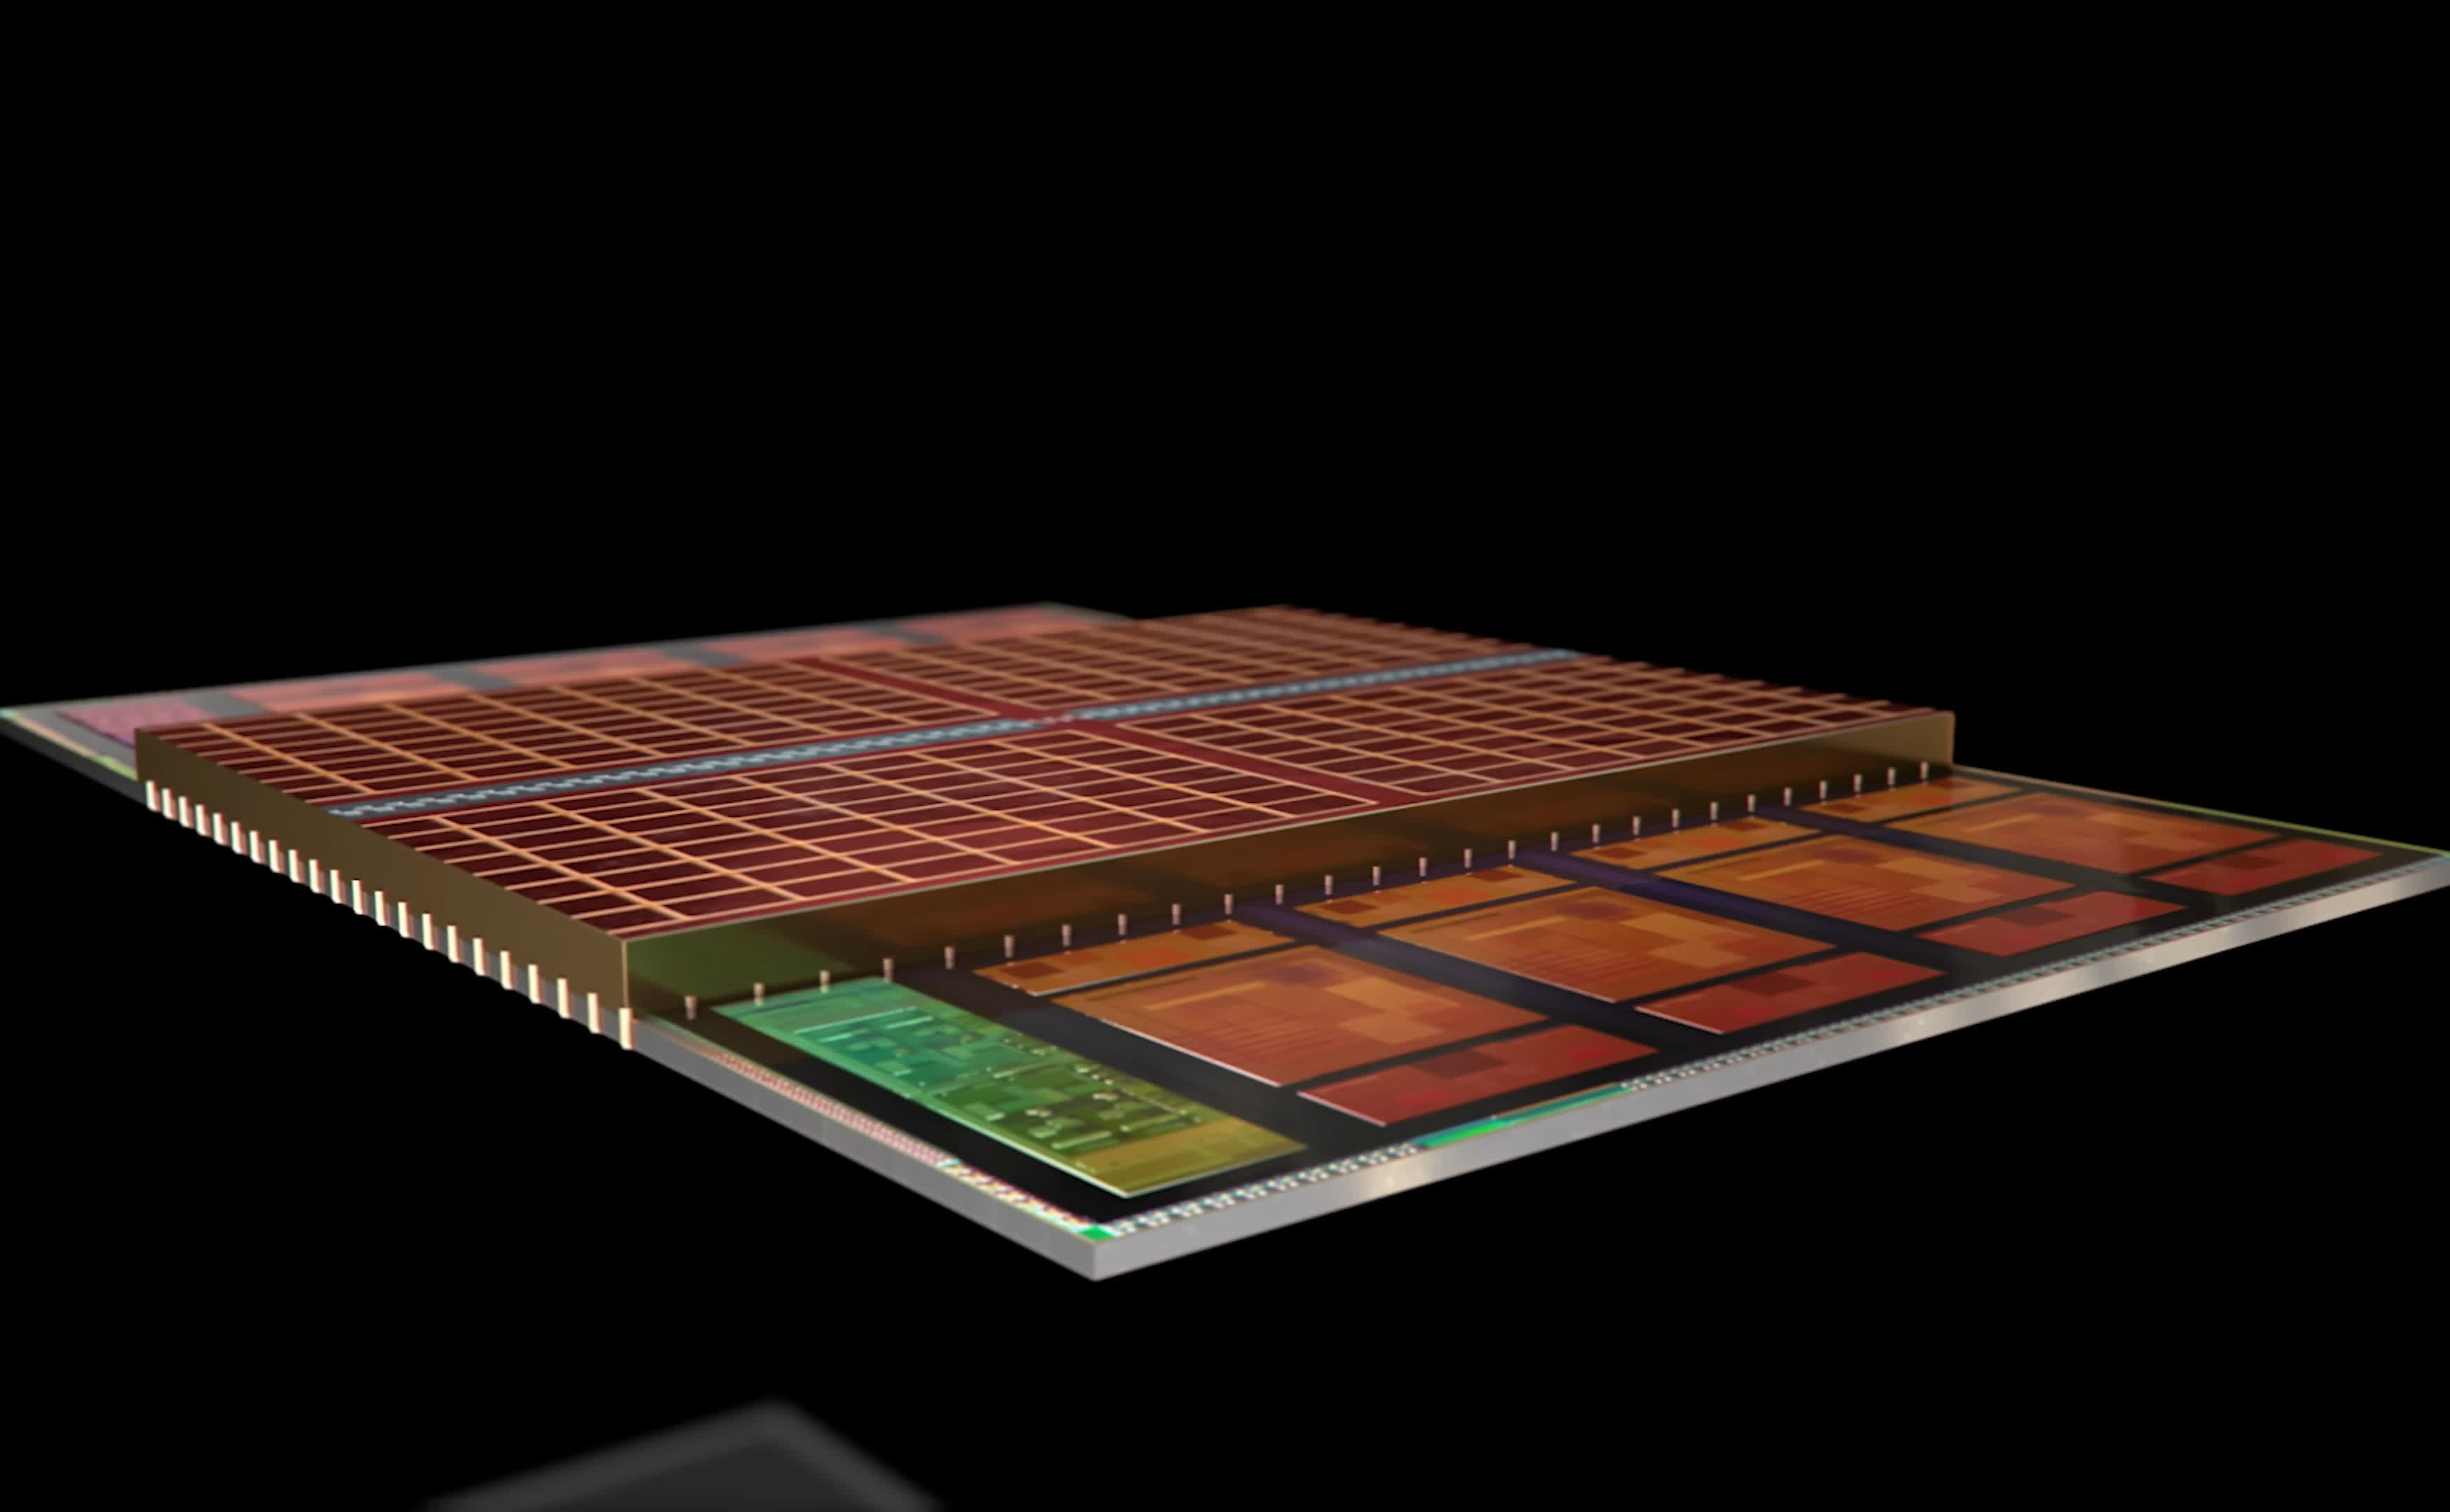 AMD explains how the new 3D V-Cache improves over the original